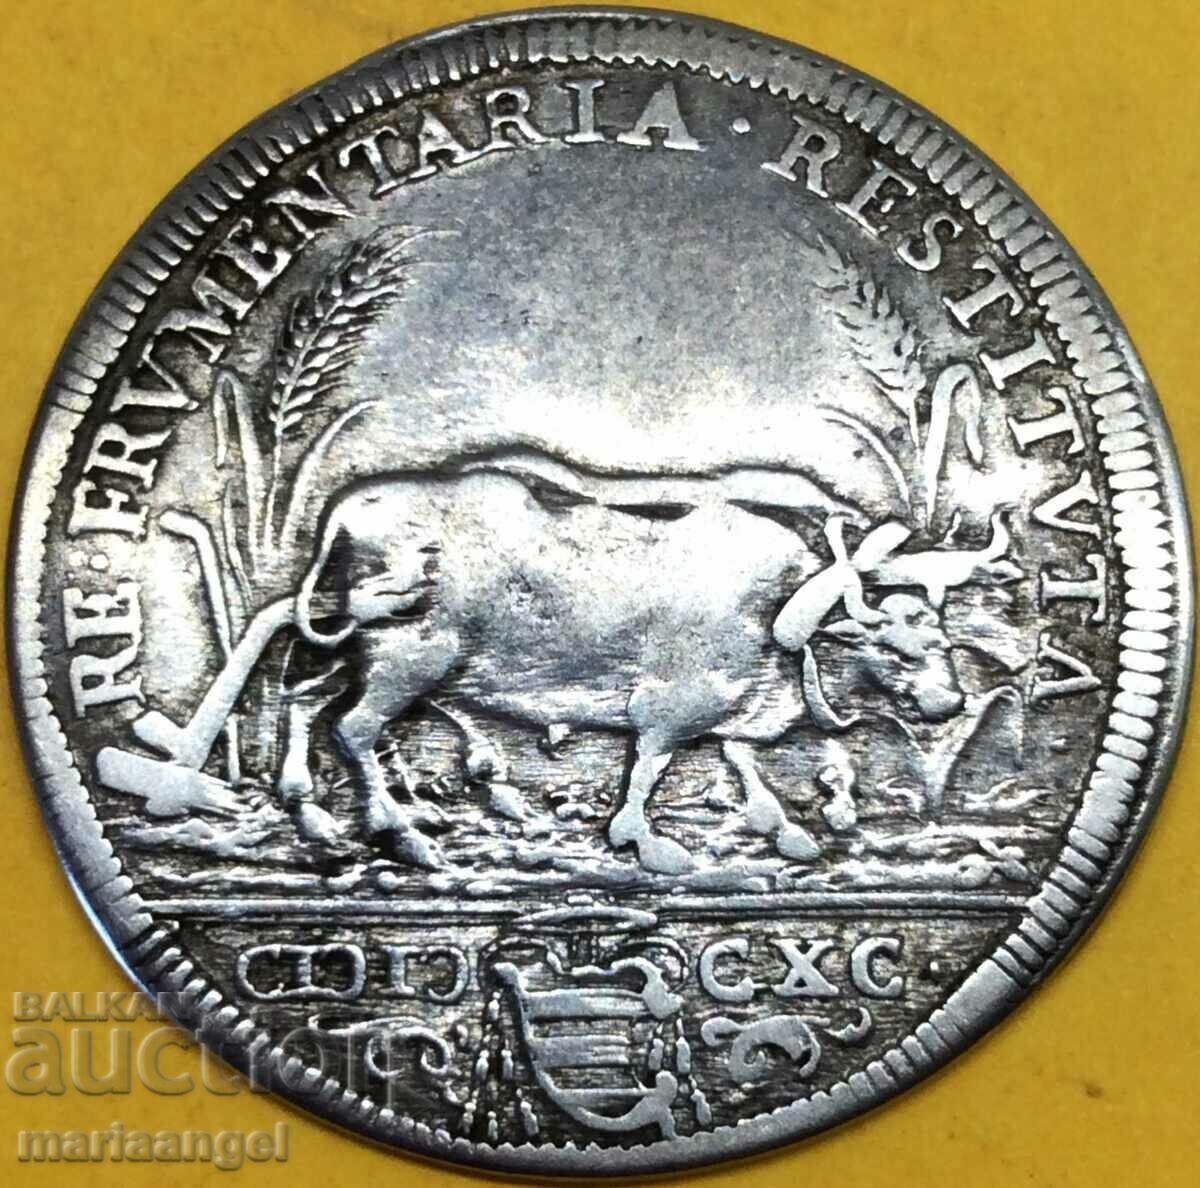 Alexander VIII Teston Vatican Rome 1690 silver